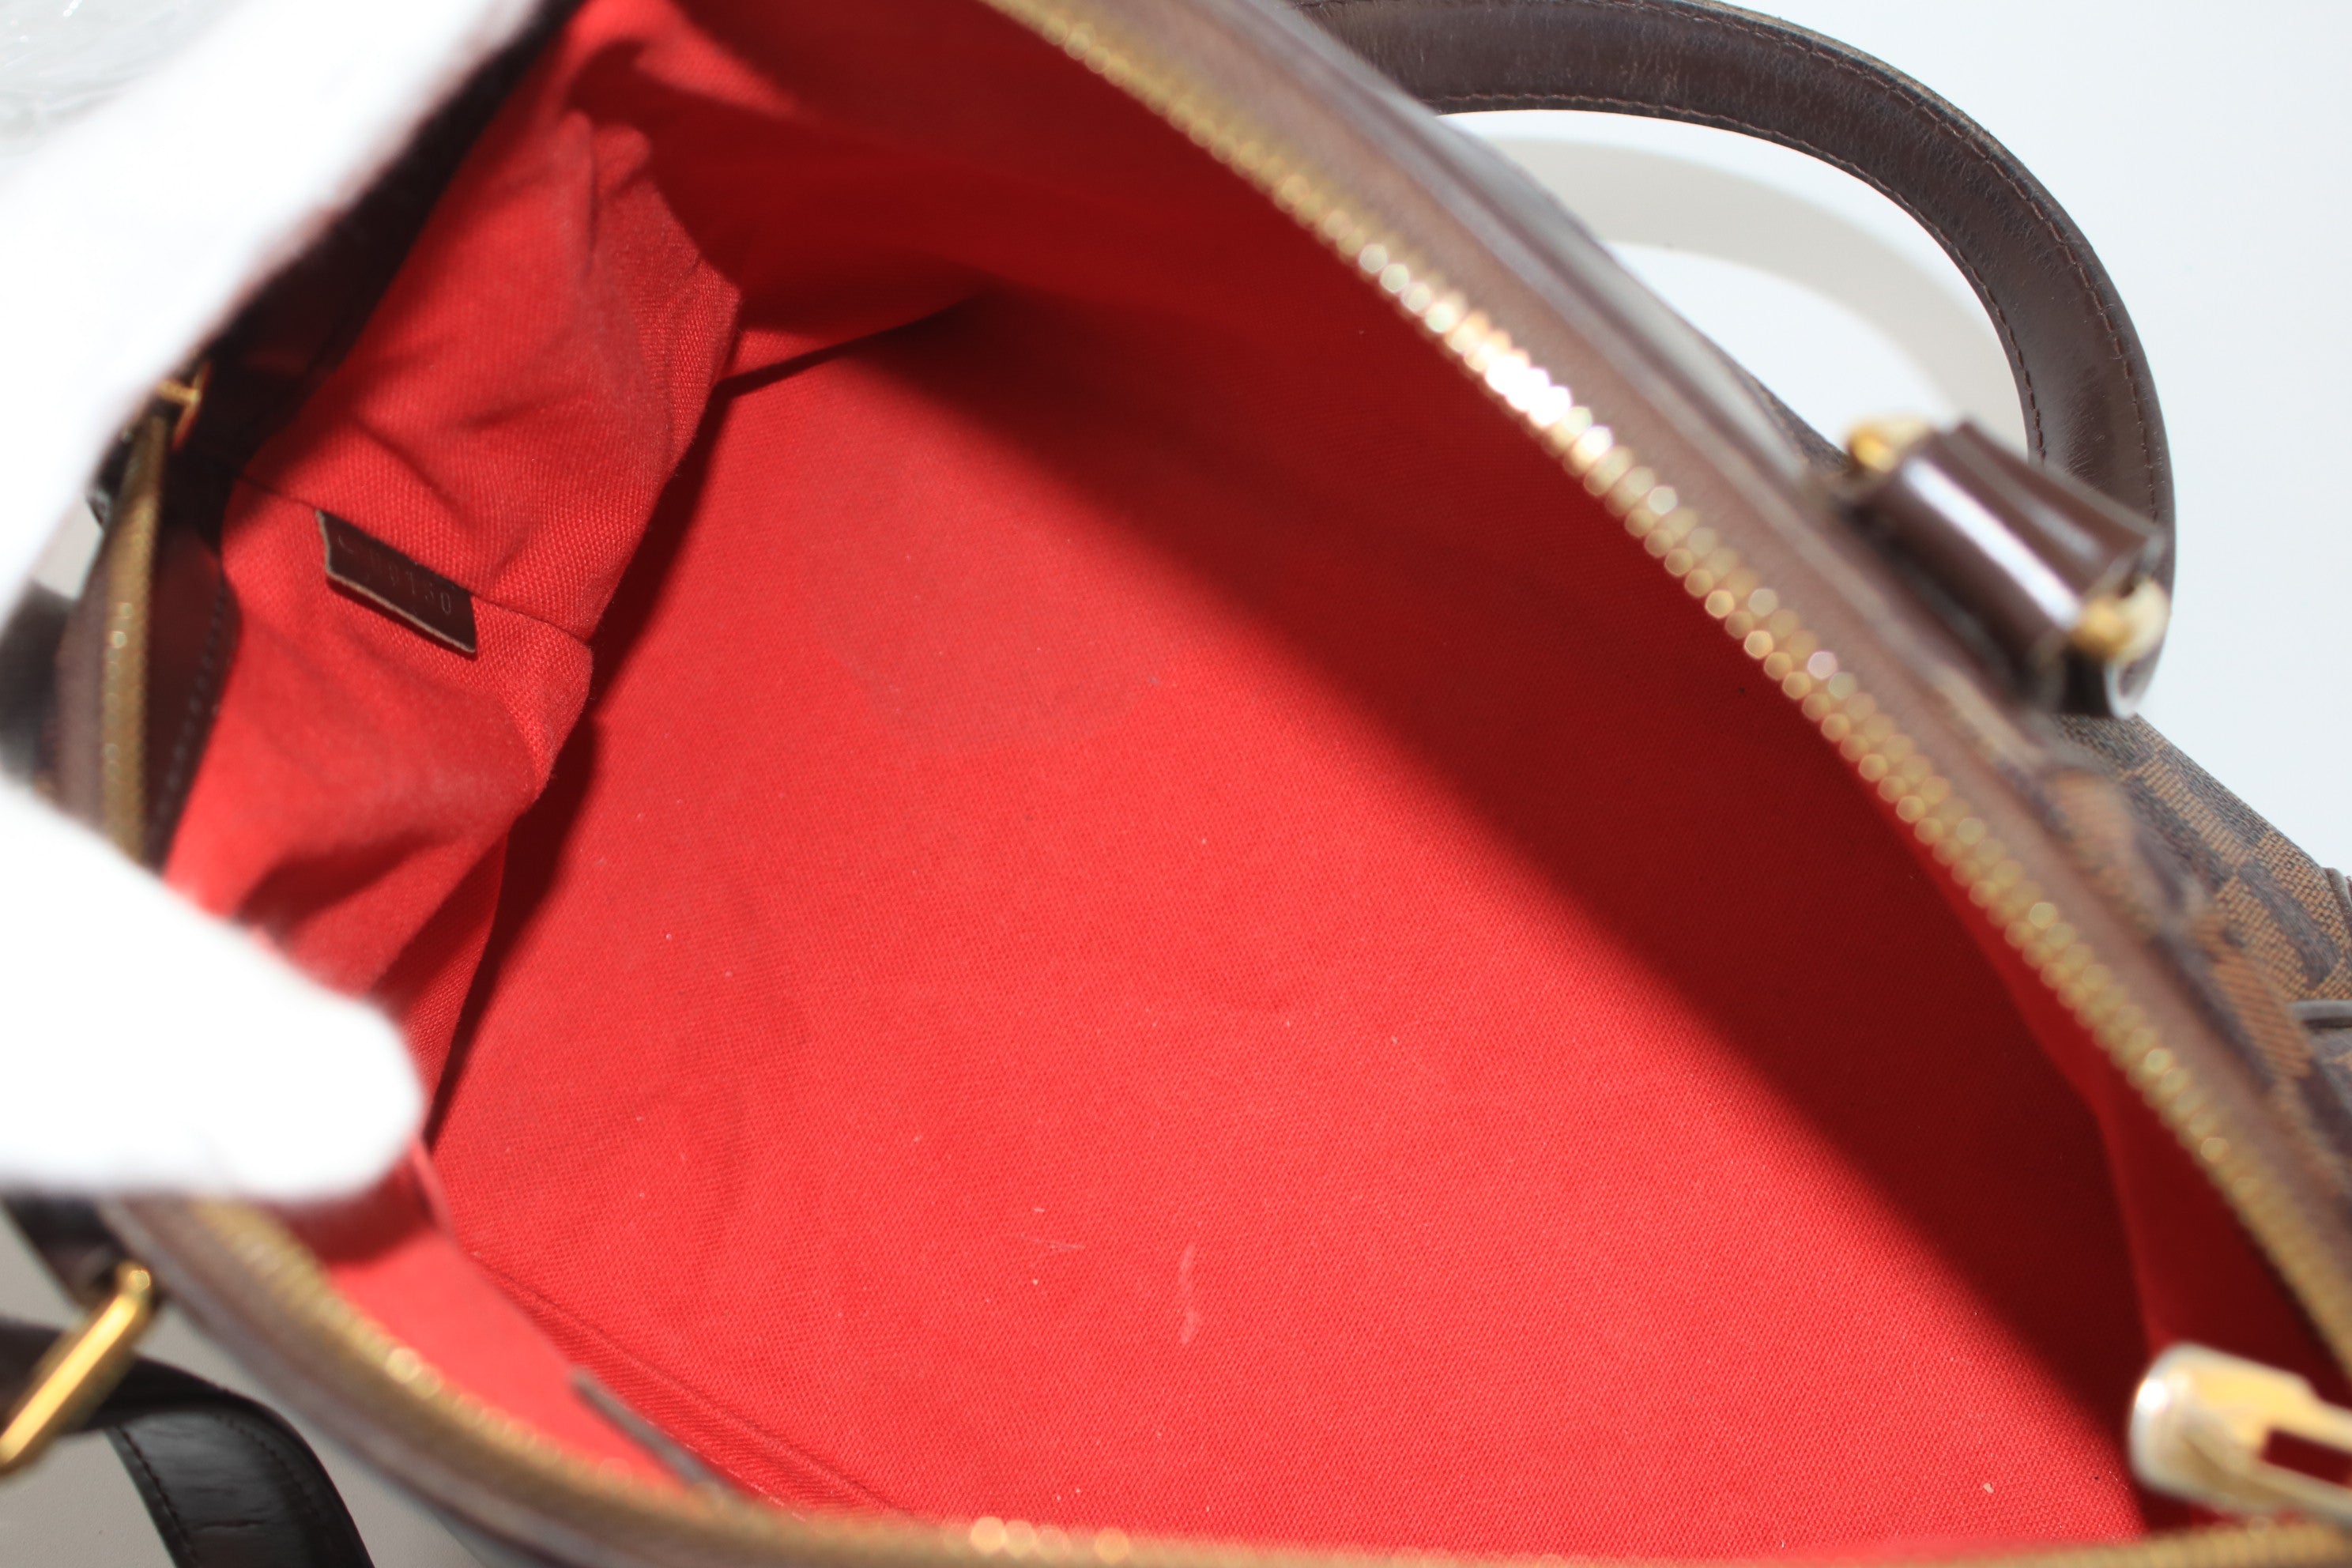 Louis Vuitton Eole 50 Damier Ebene Rolling Luggage bag Used (3788)